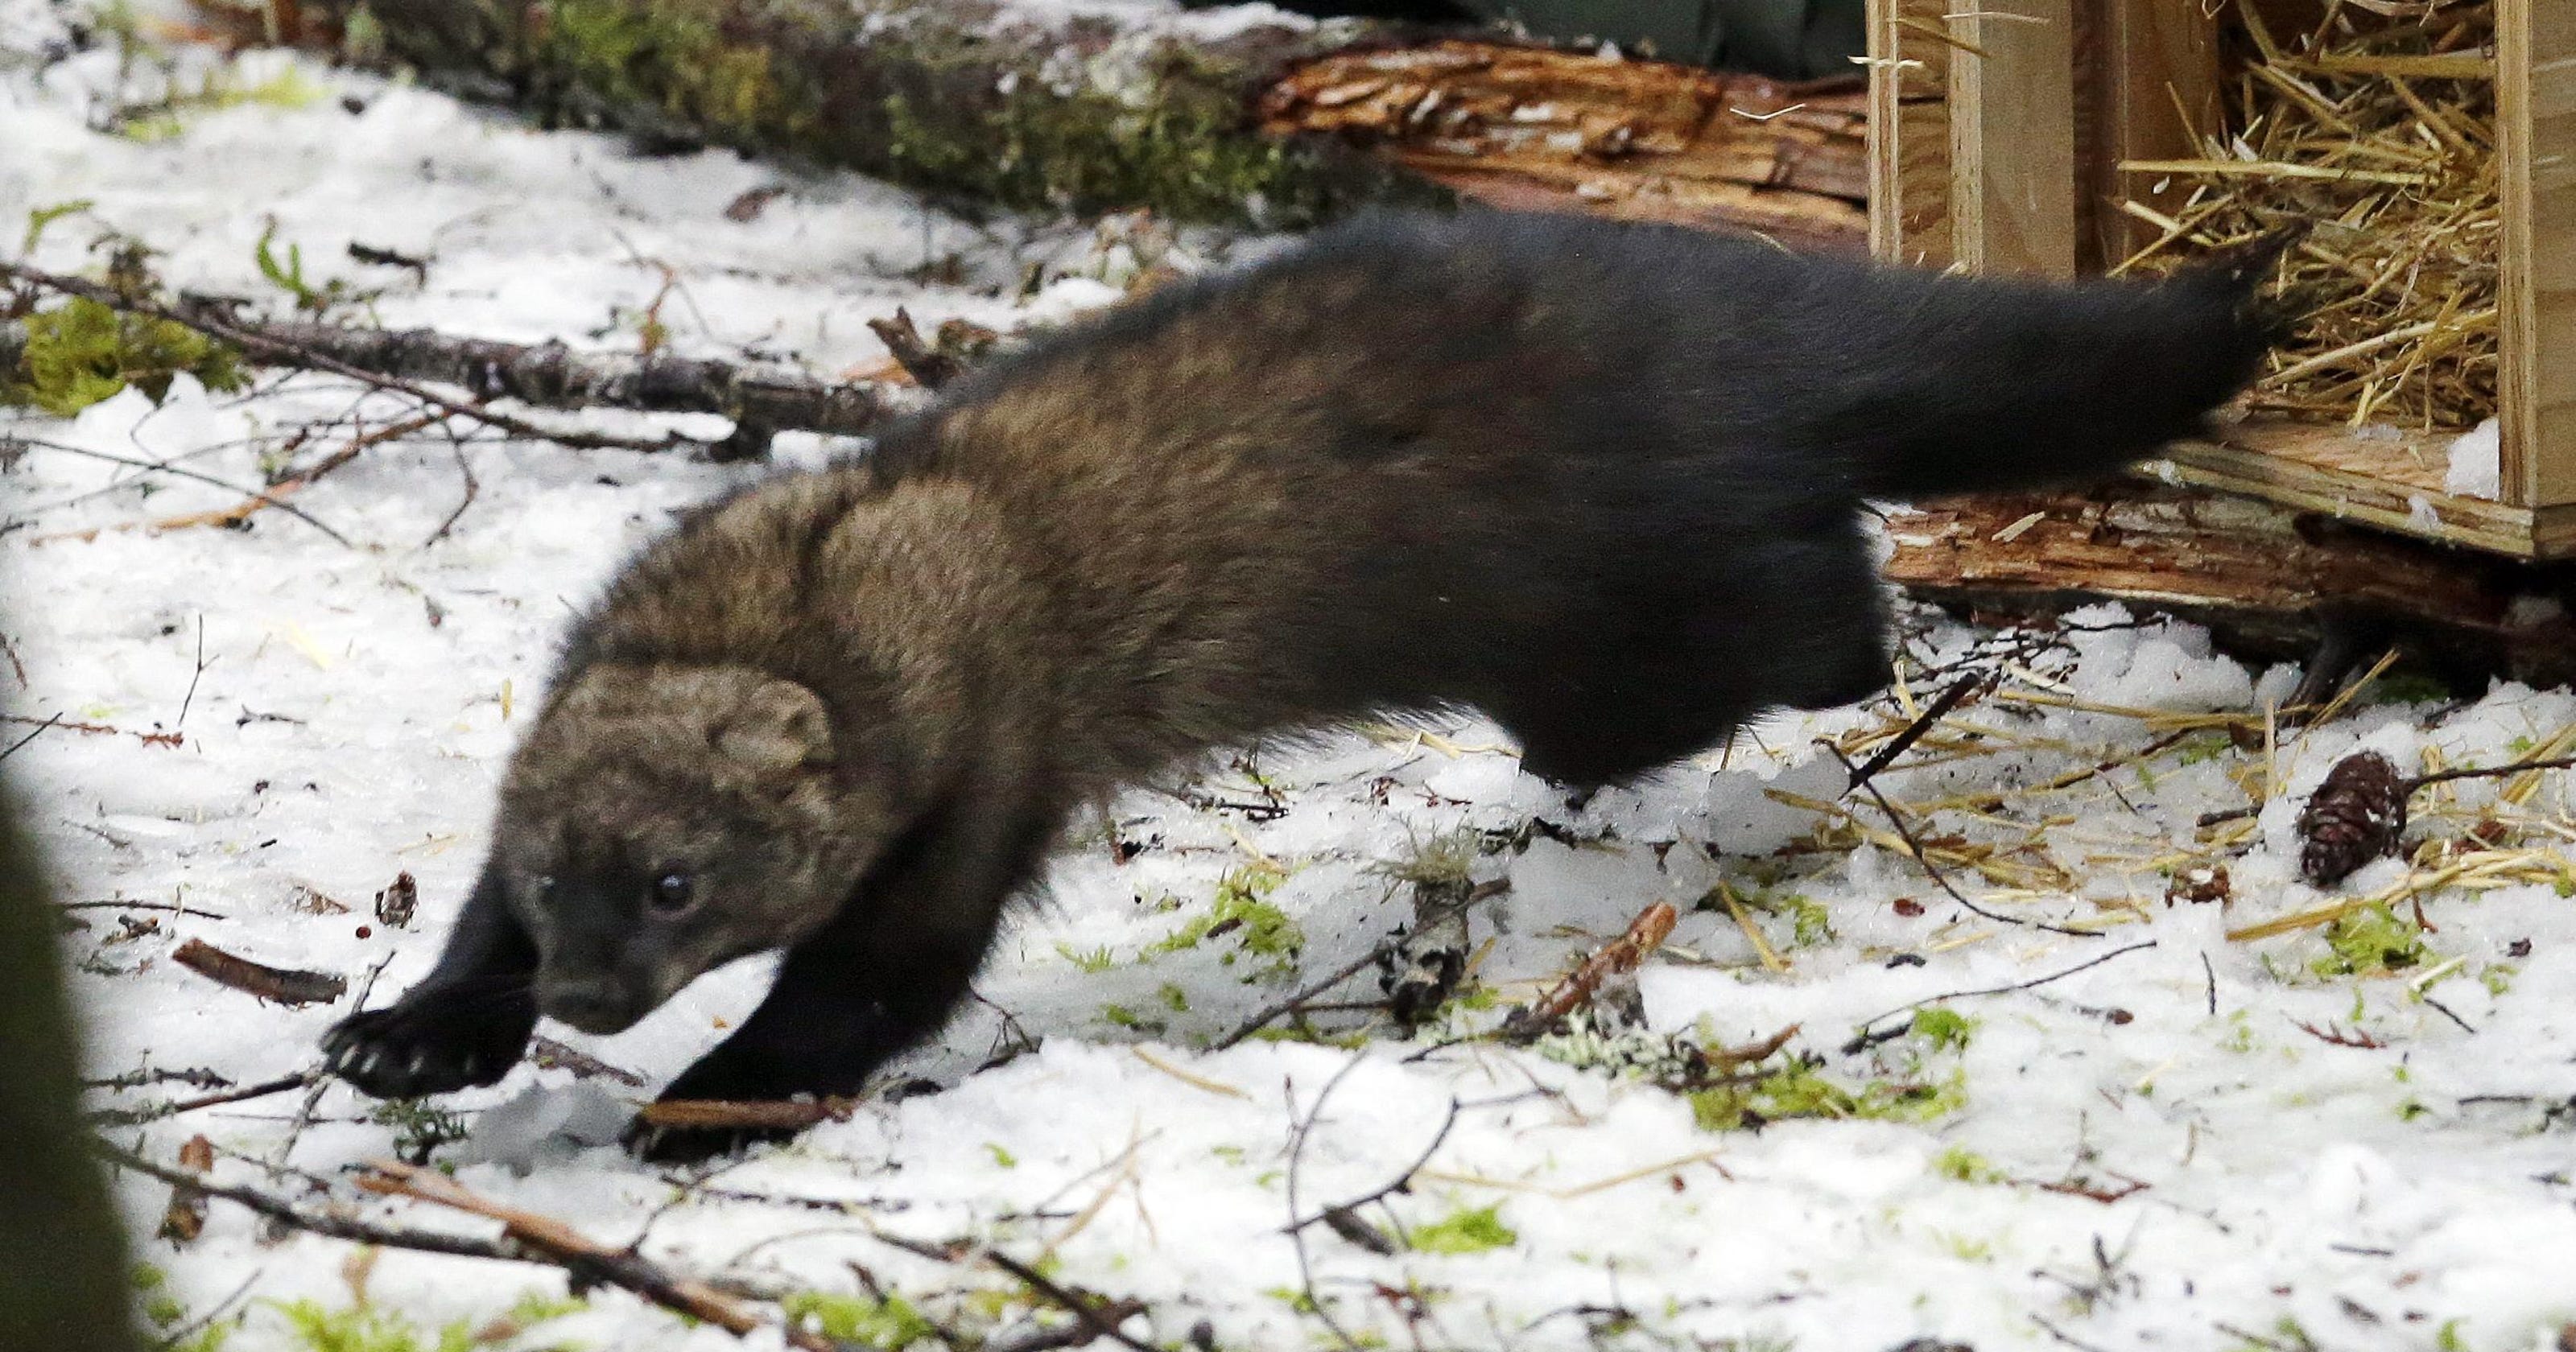 weasel rare species story detroitnews